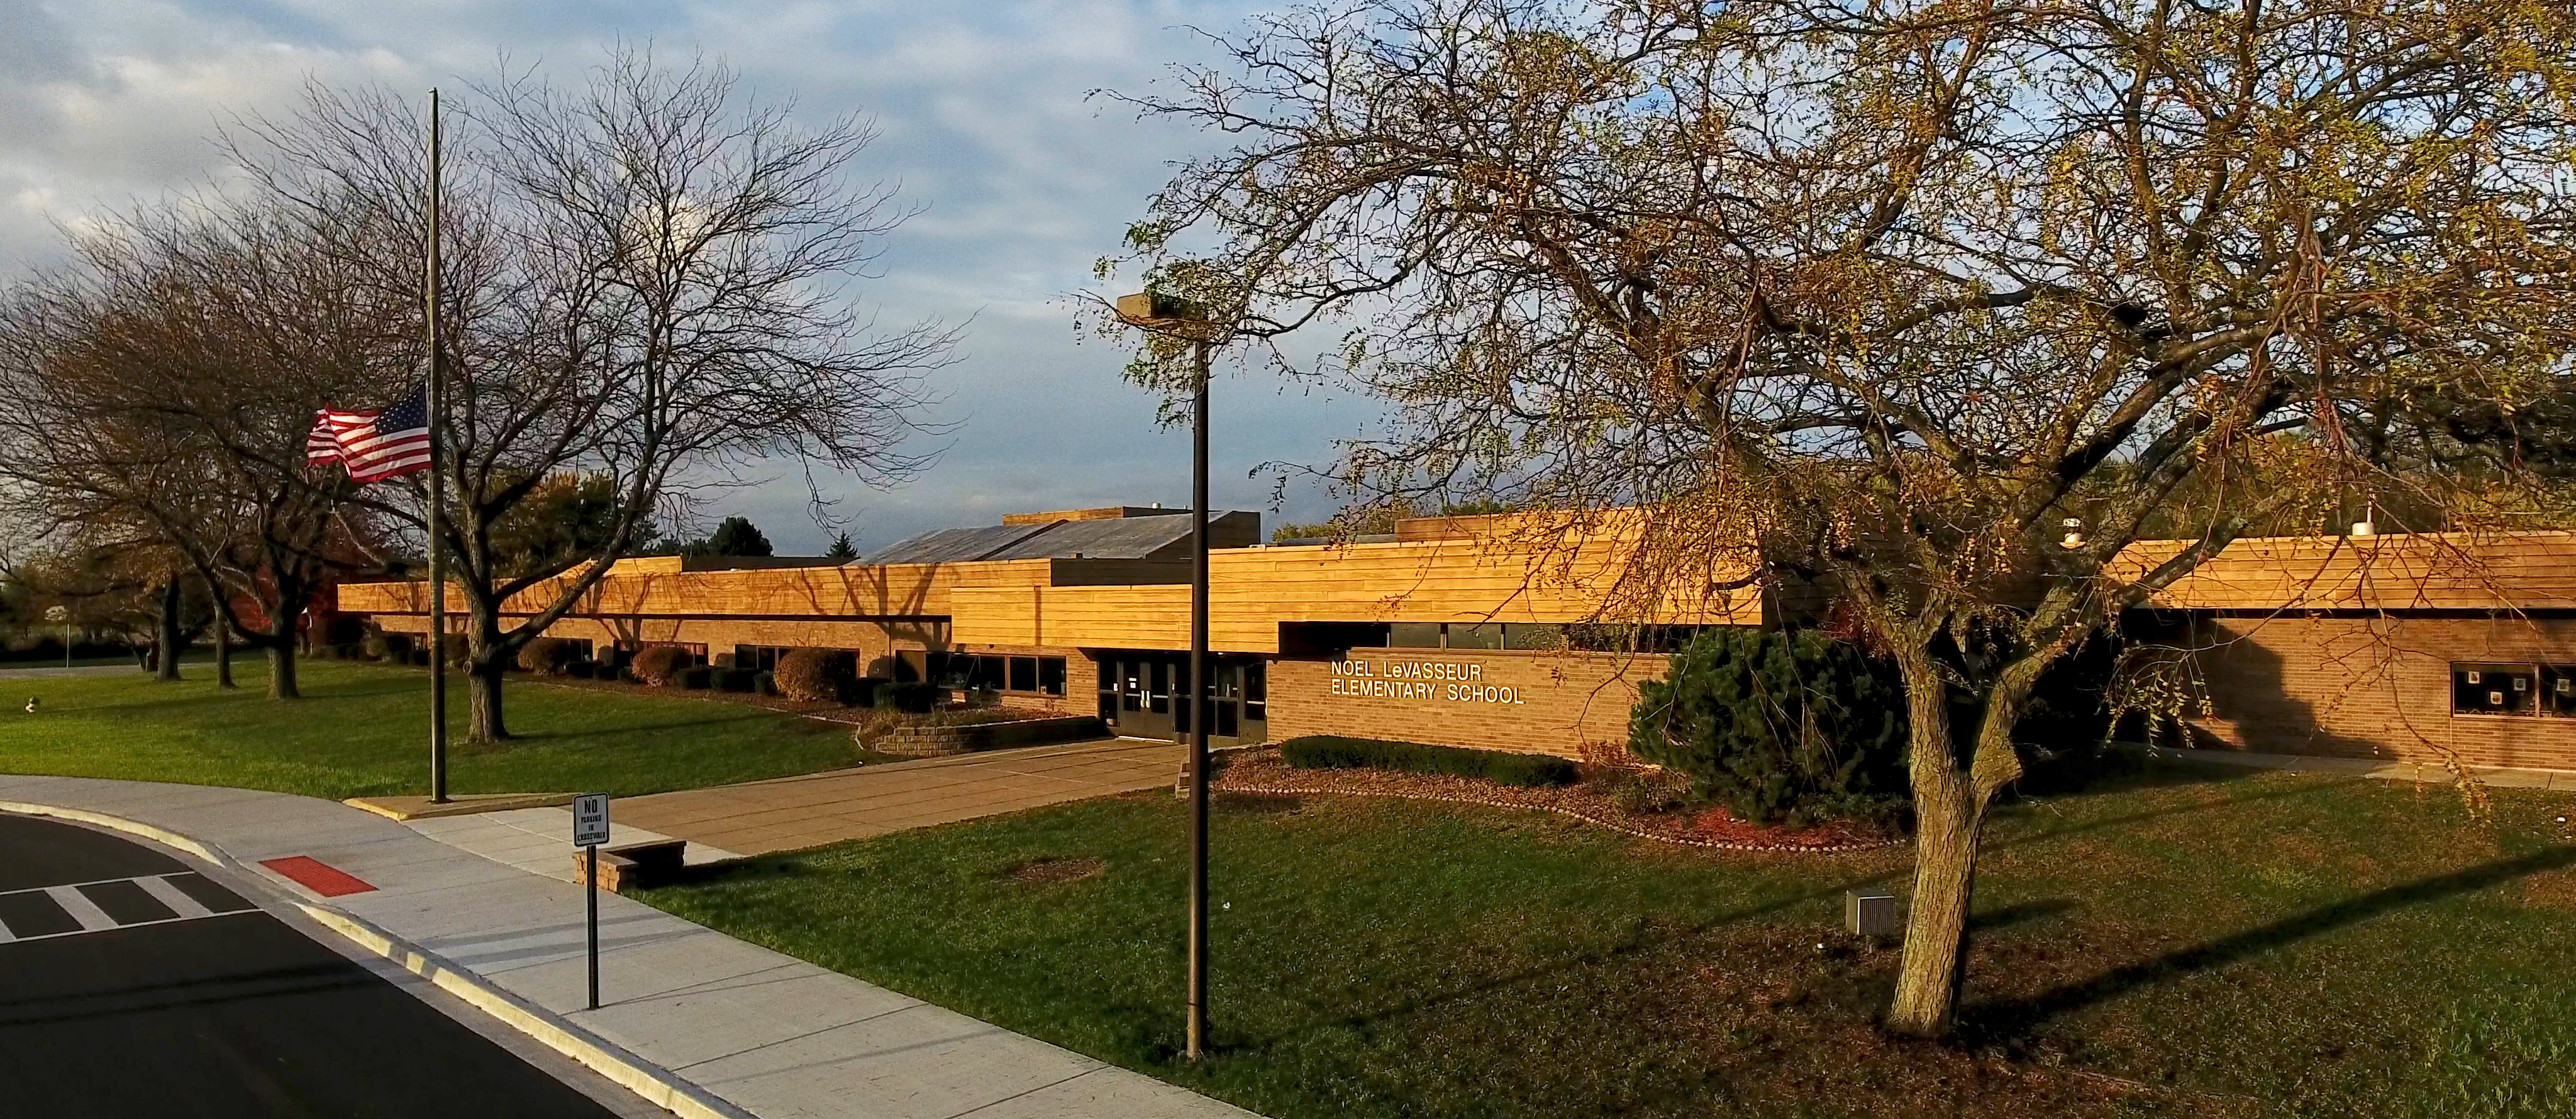 Full view of the front of Noel LeVasseur Elementary School.